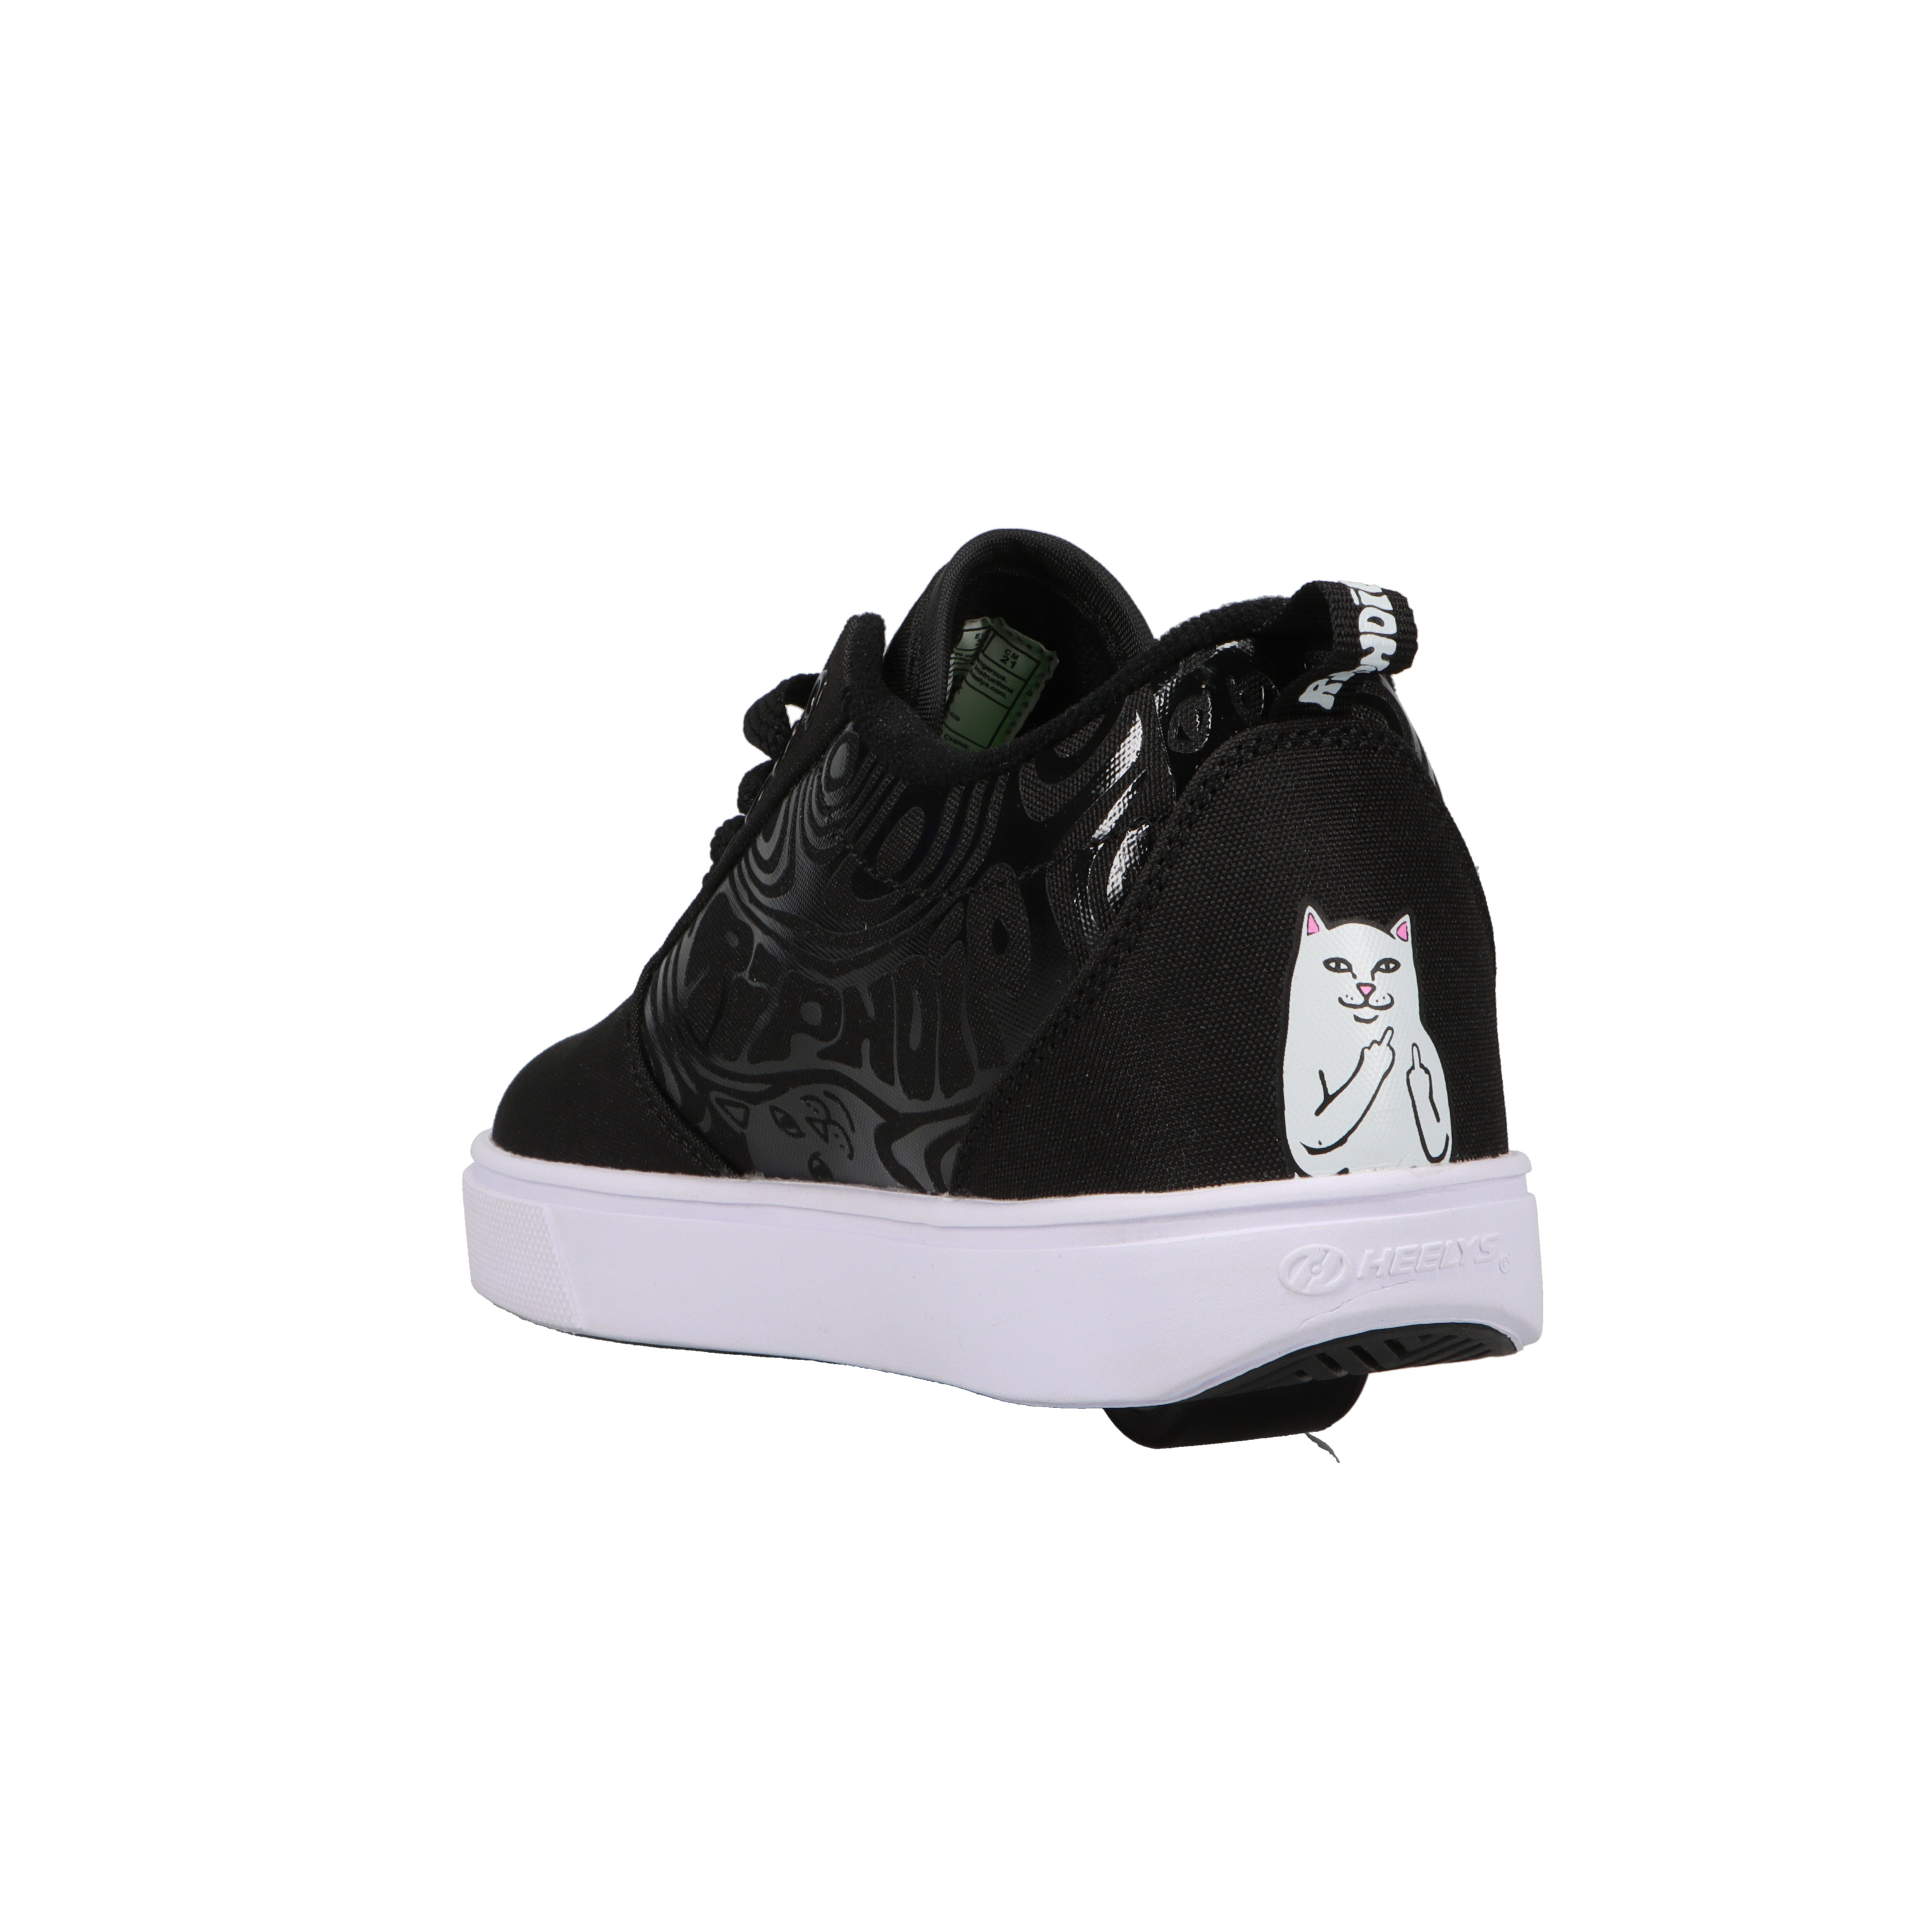 Pro 20 Heelys Shoes (Black/White/Neon Green)